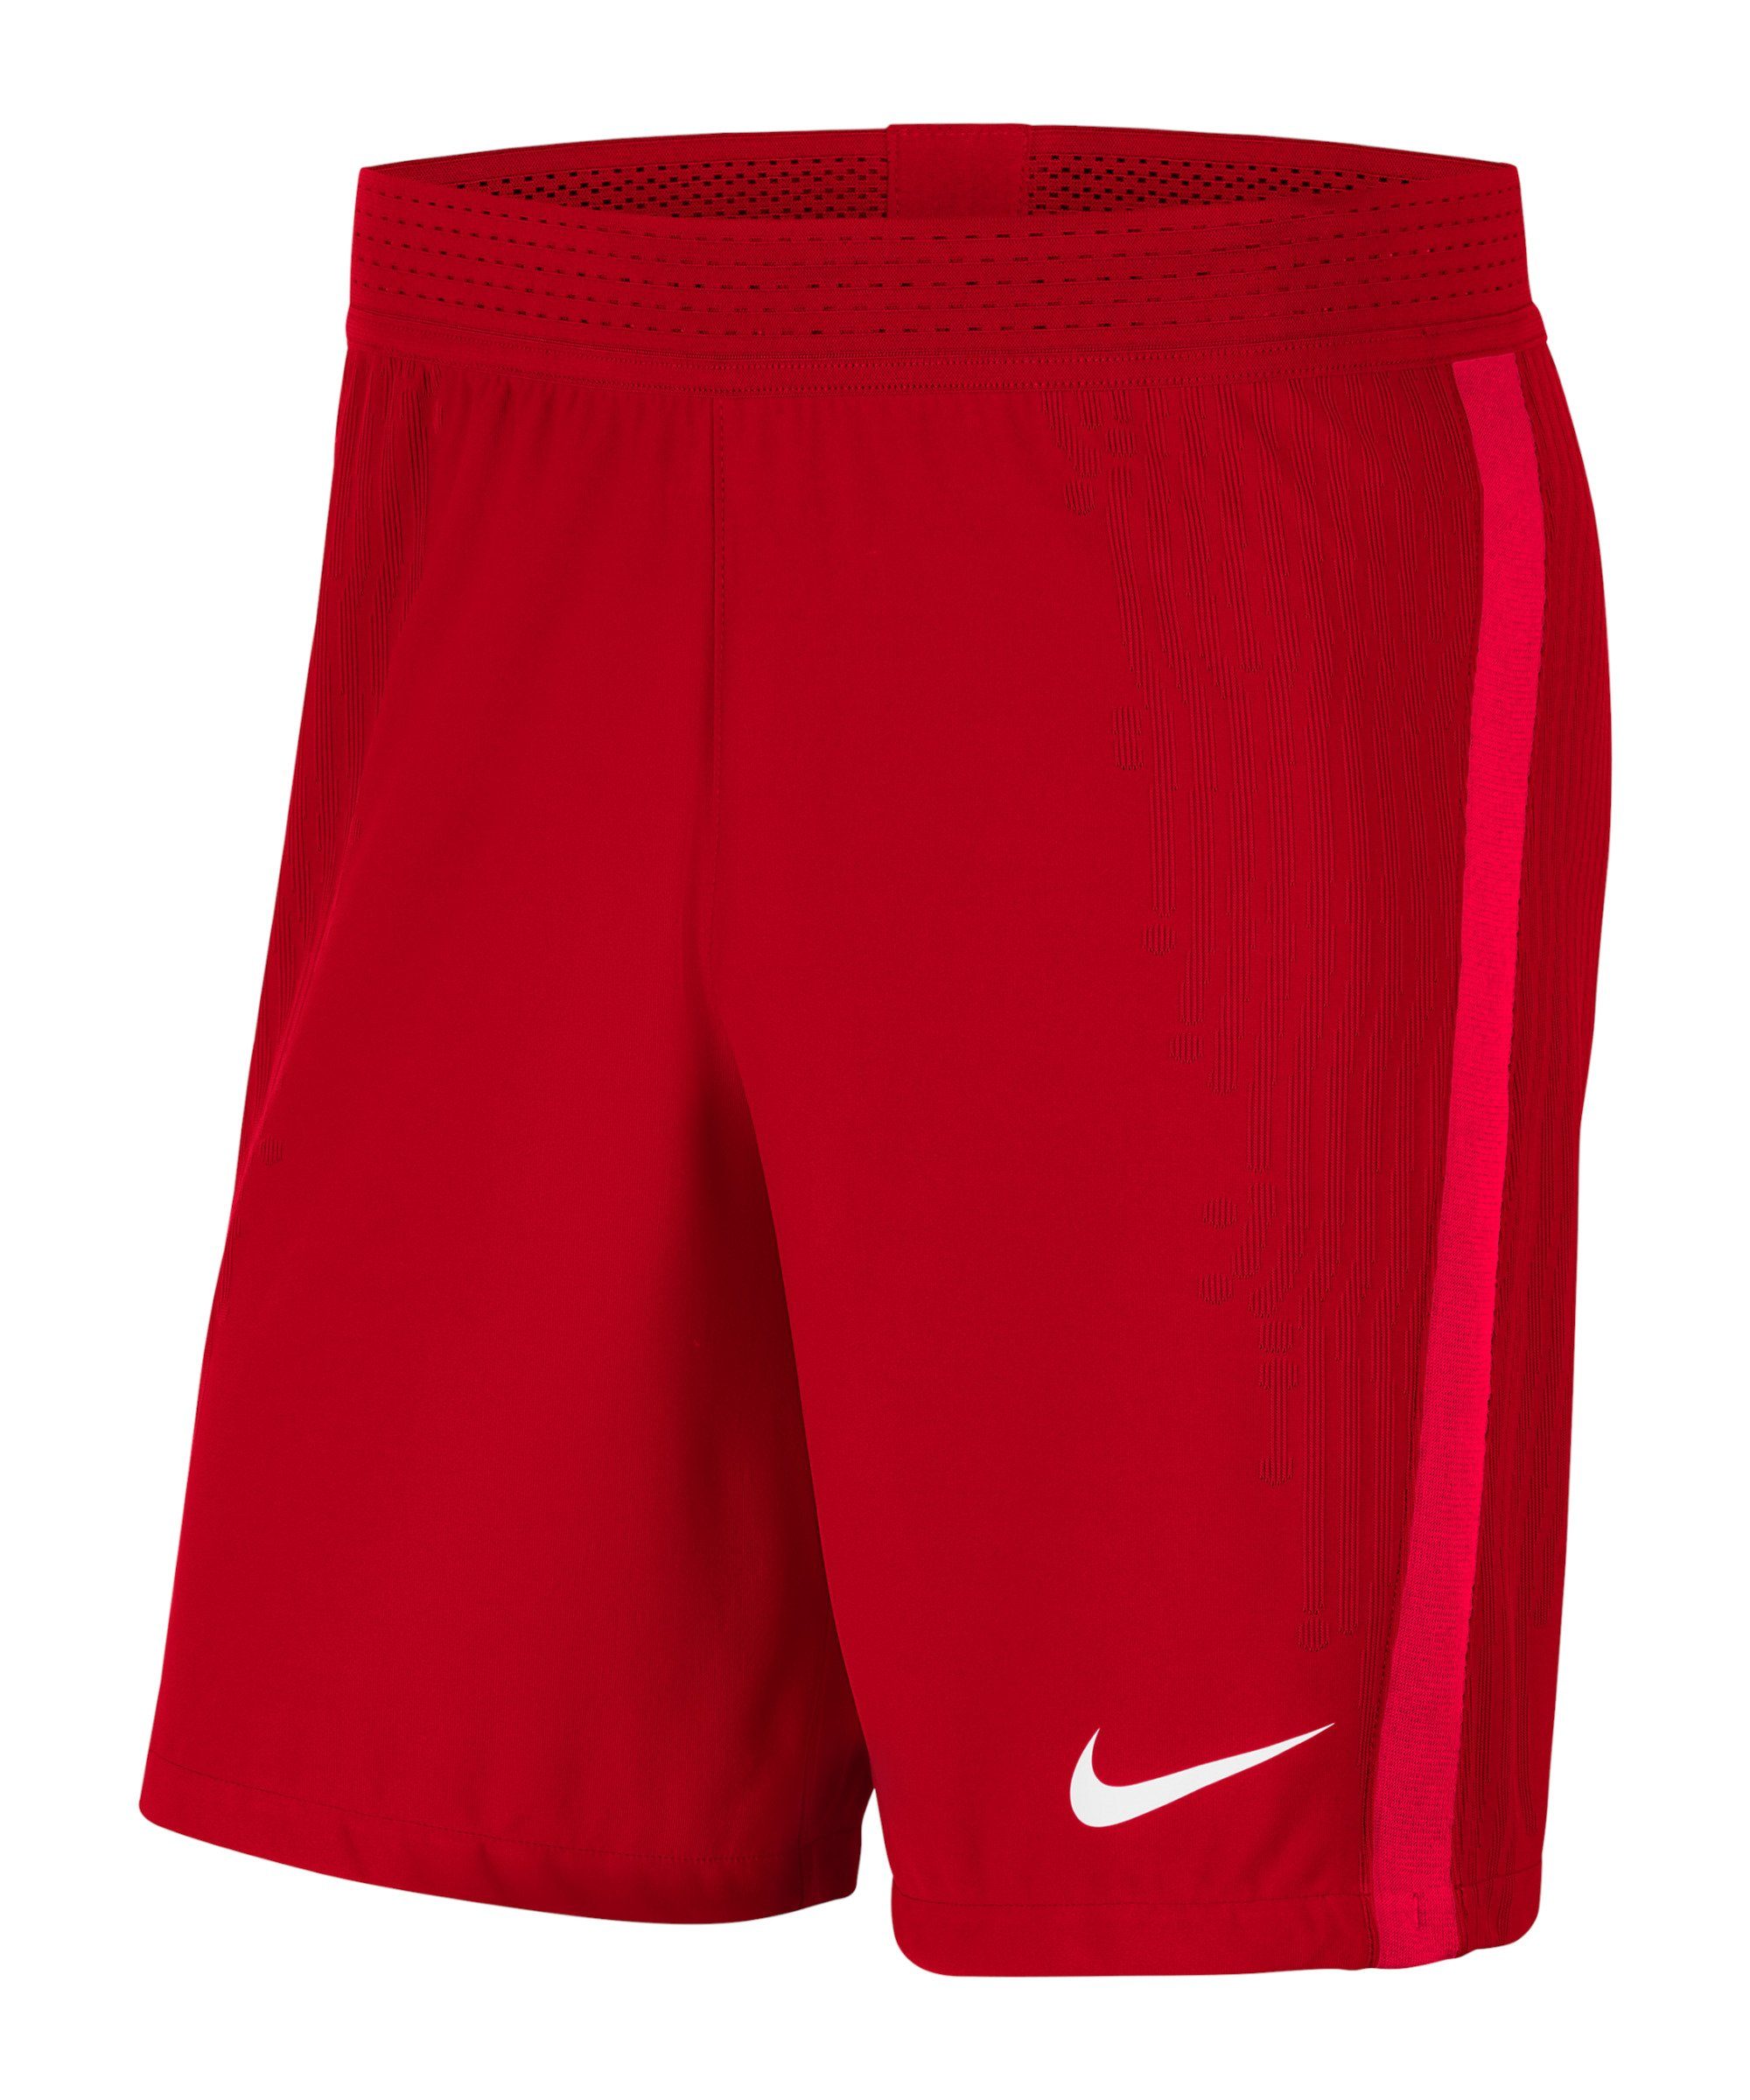 Short Nike Vapor III rotweiss Knit Sporthose